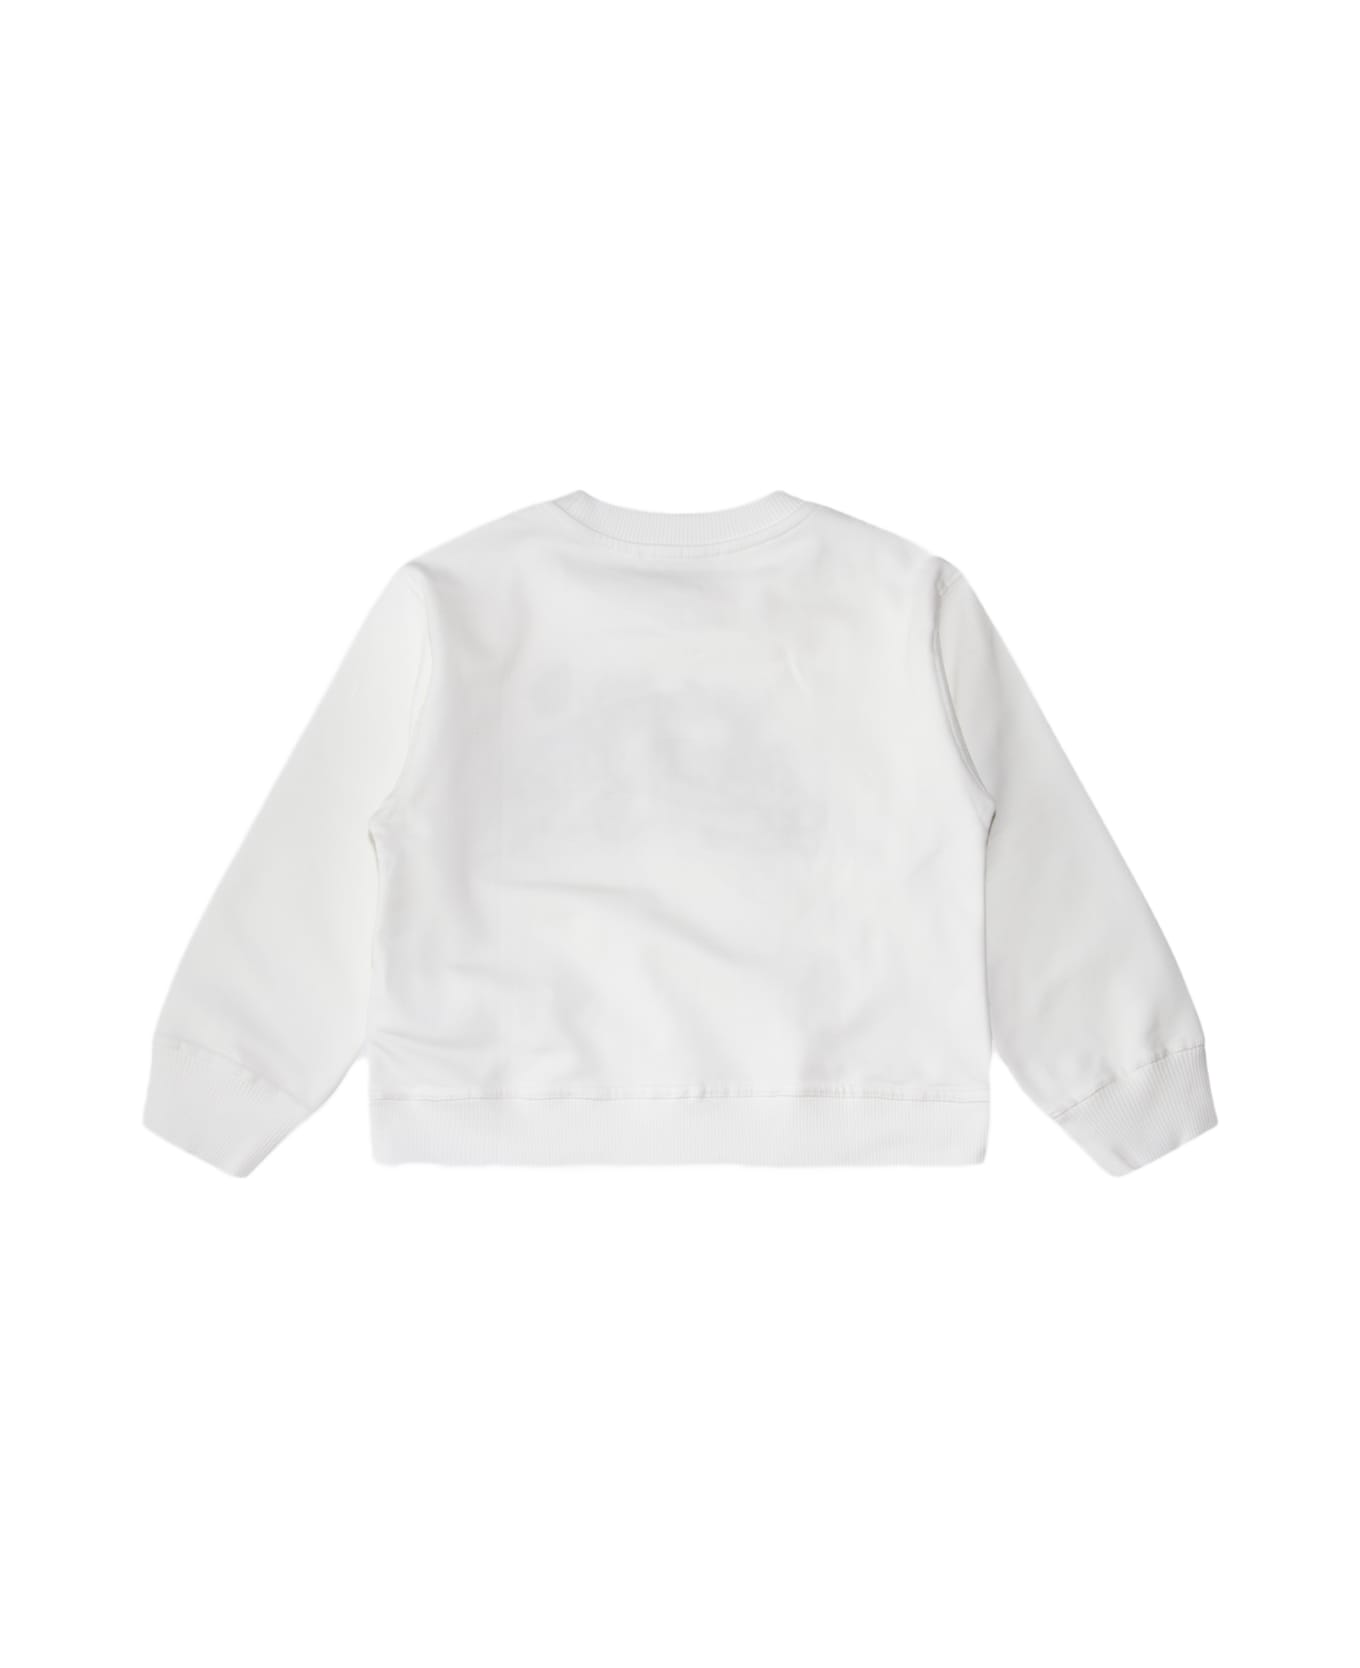 Monnalisa White Cotton Sweatshirt - White